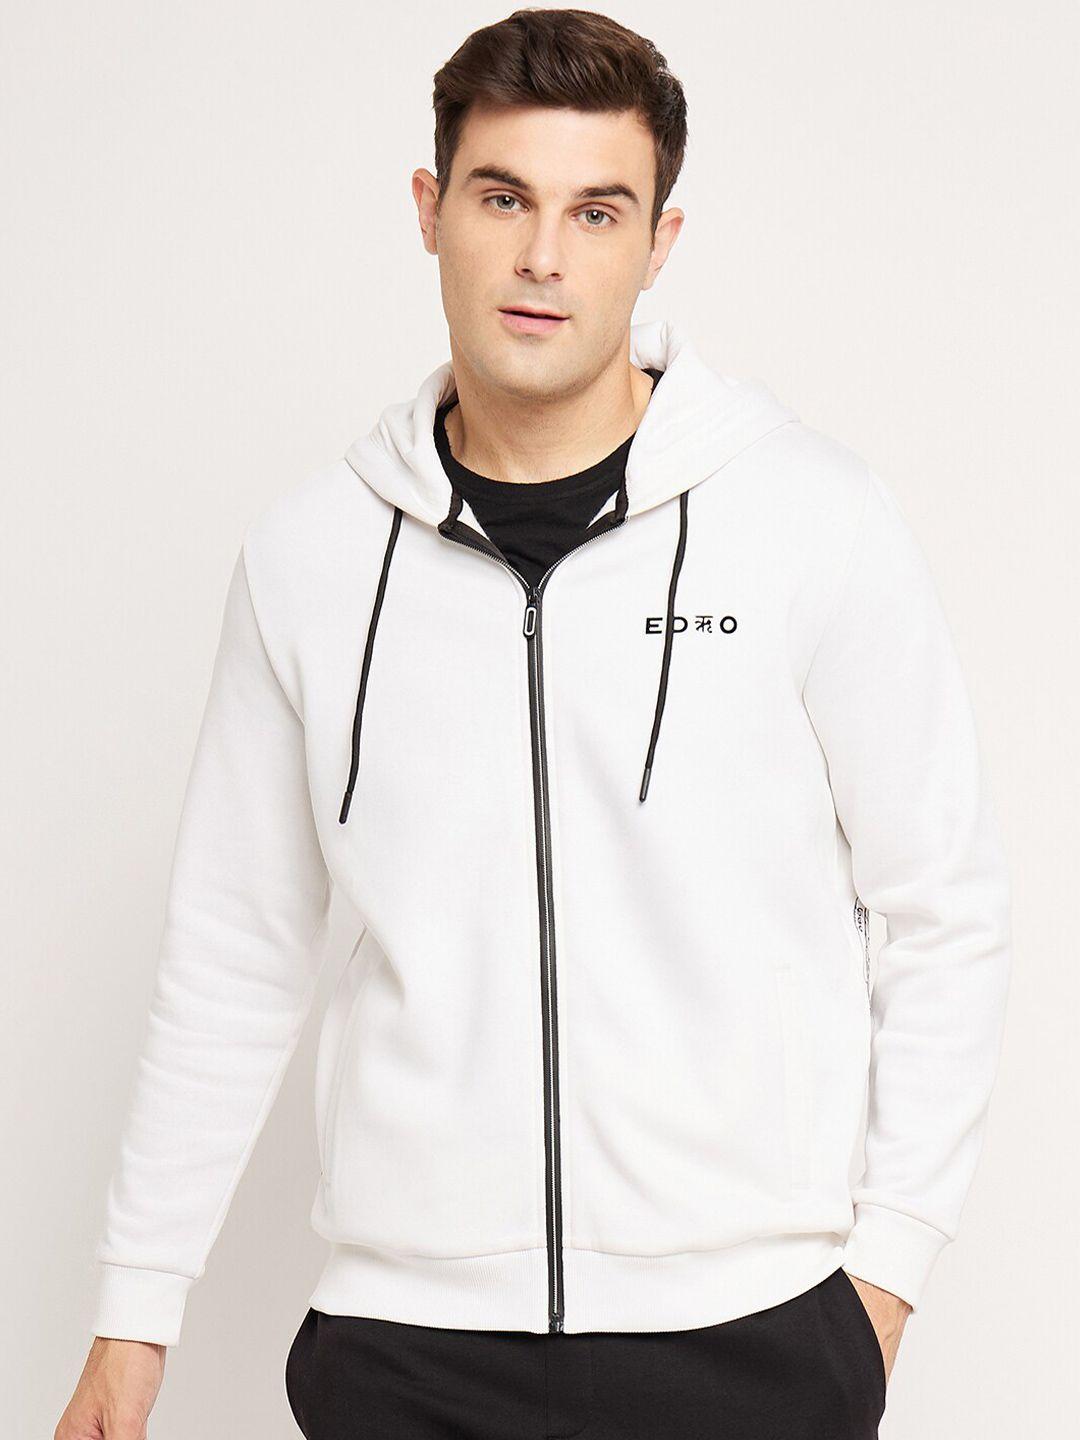 edrio hooded cotton front-open sweatshirt